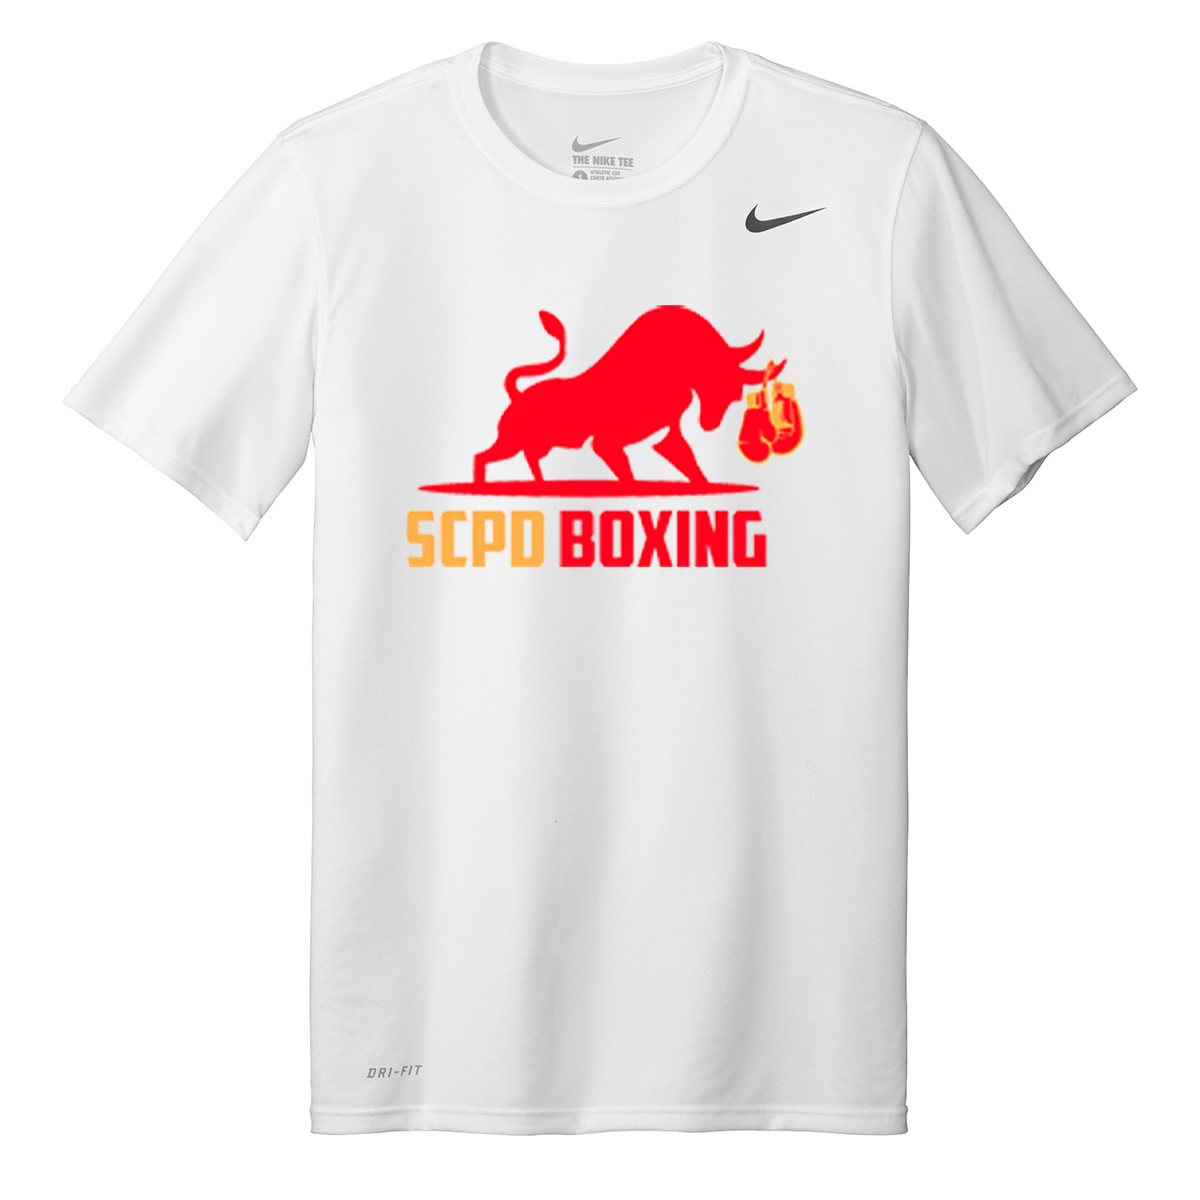 SCPD Boxing Nike rLegend Tee